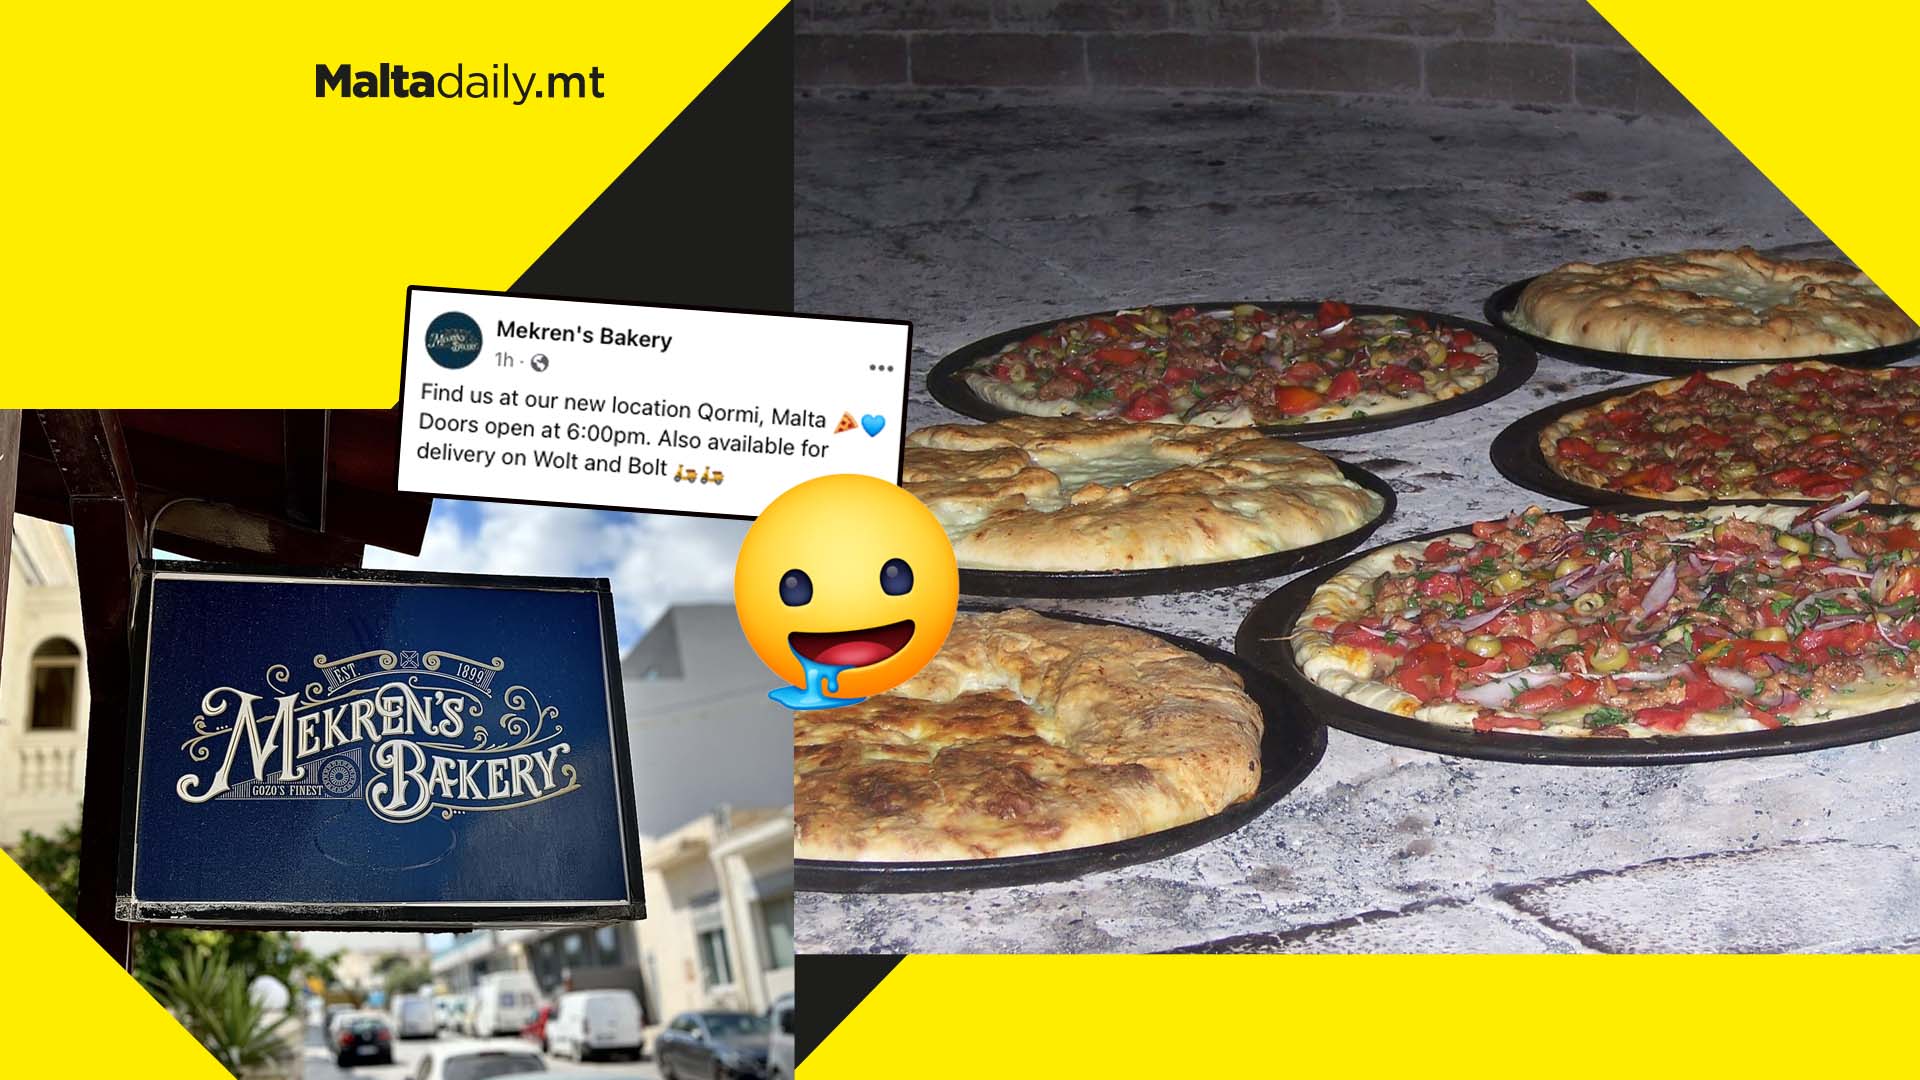 Beloved Mekren’s Bakery brings its baked goods to Malta!